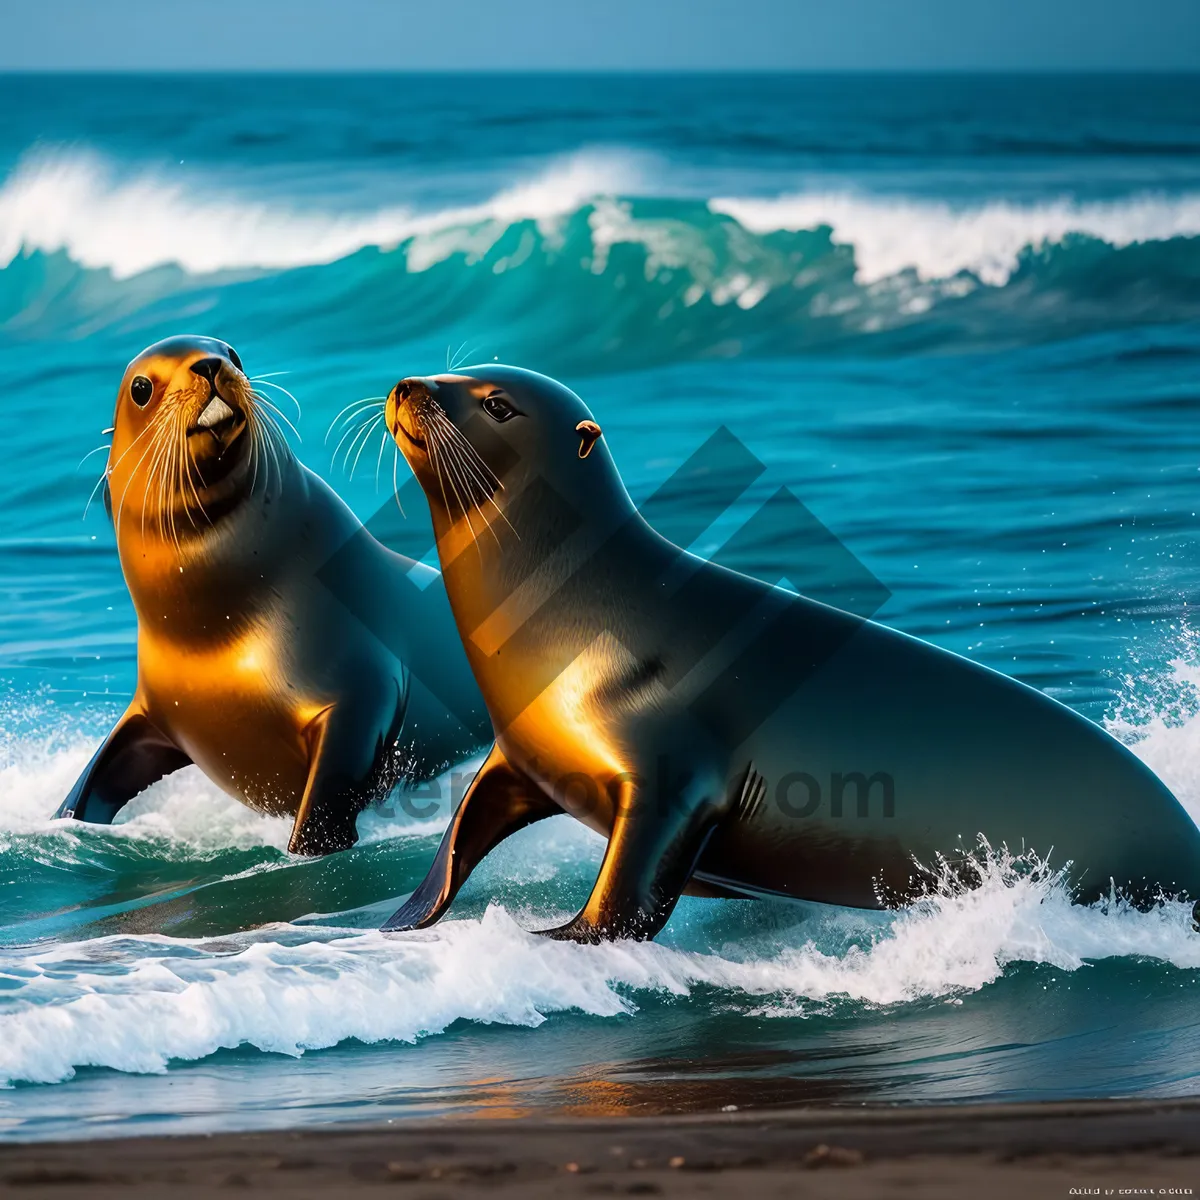 Picture of Playful Sea Lion Splashing in Ocean Waves